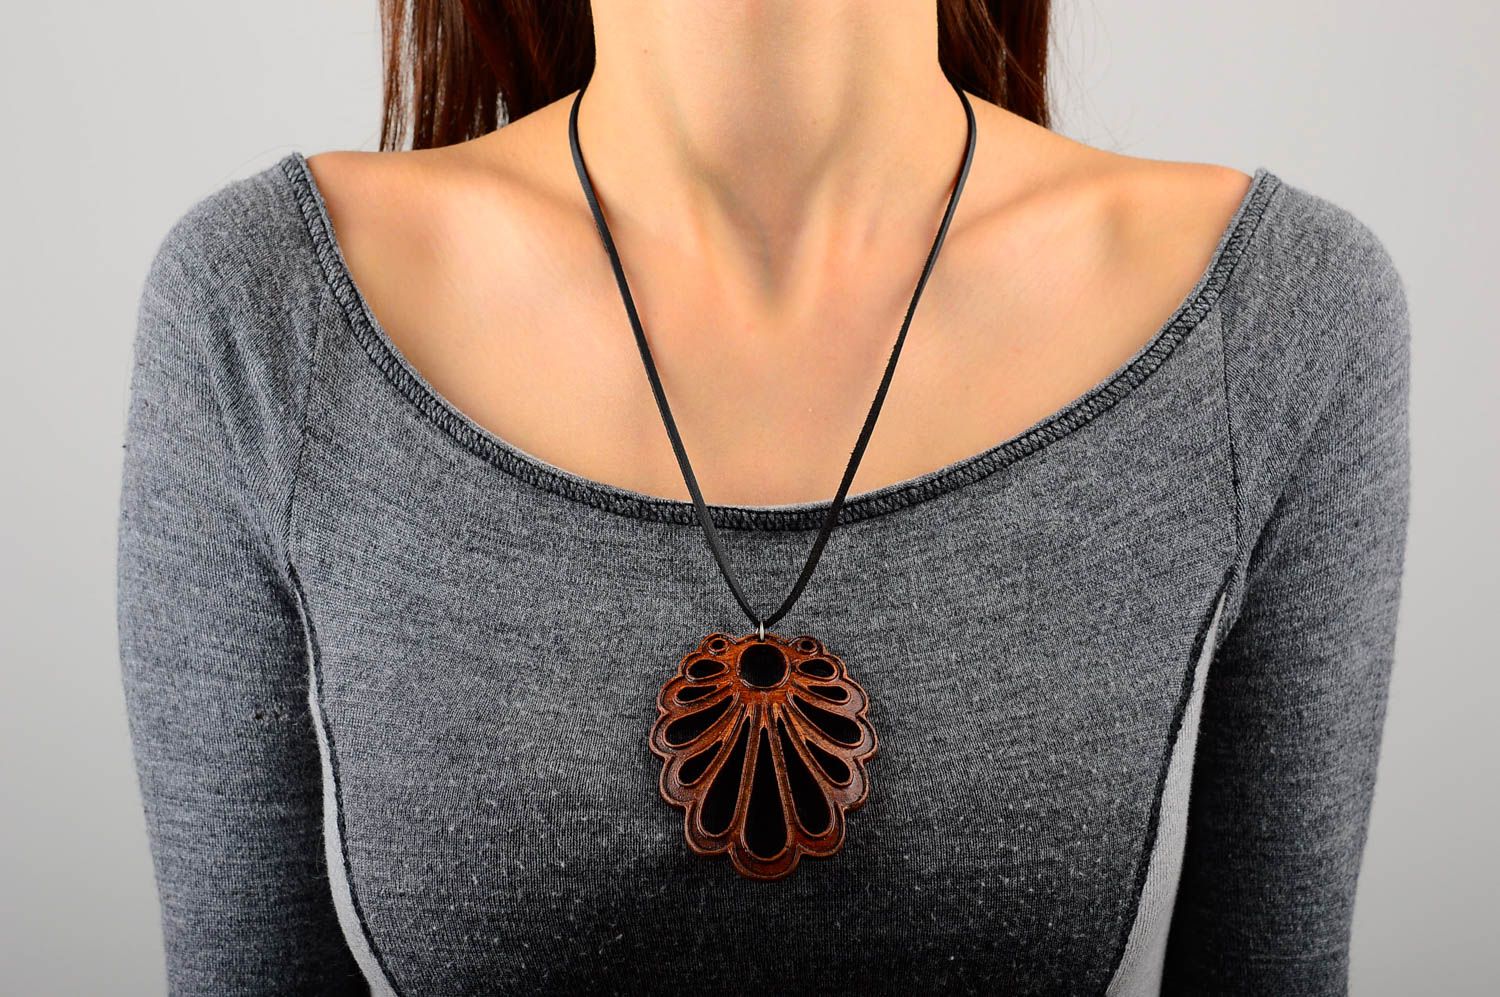 Neck accessory wooden accessory neck accessory unusual pendant beautiful pendant photo 1